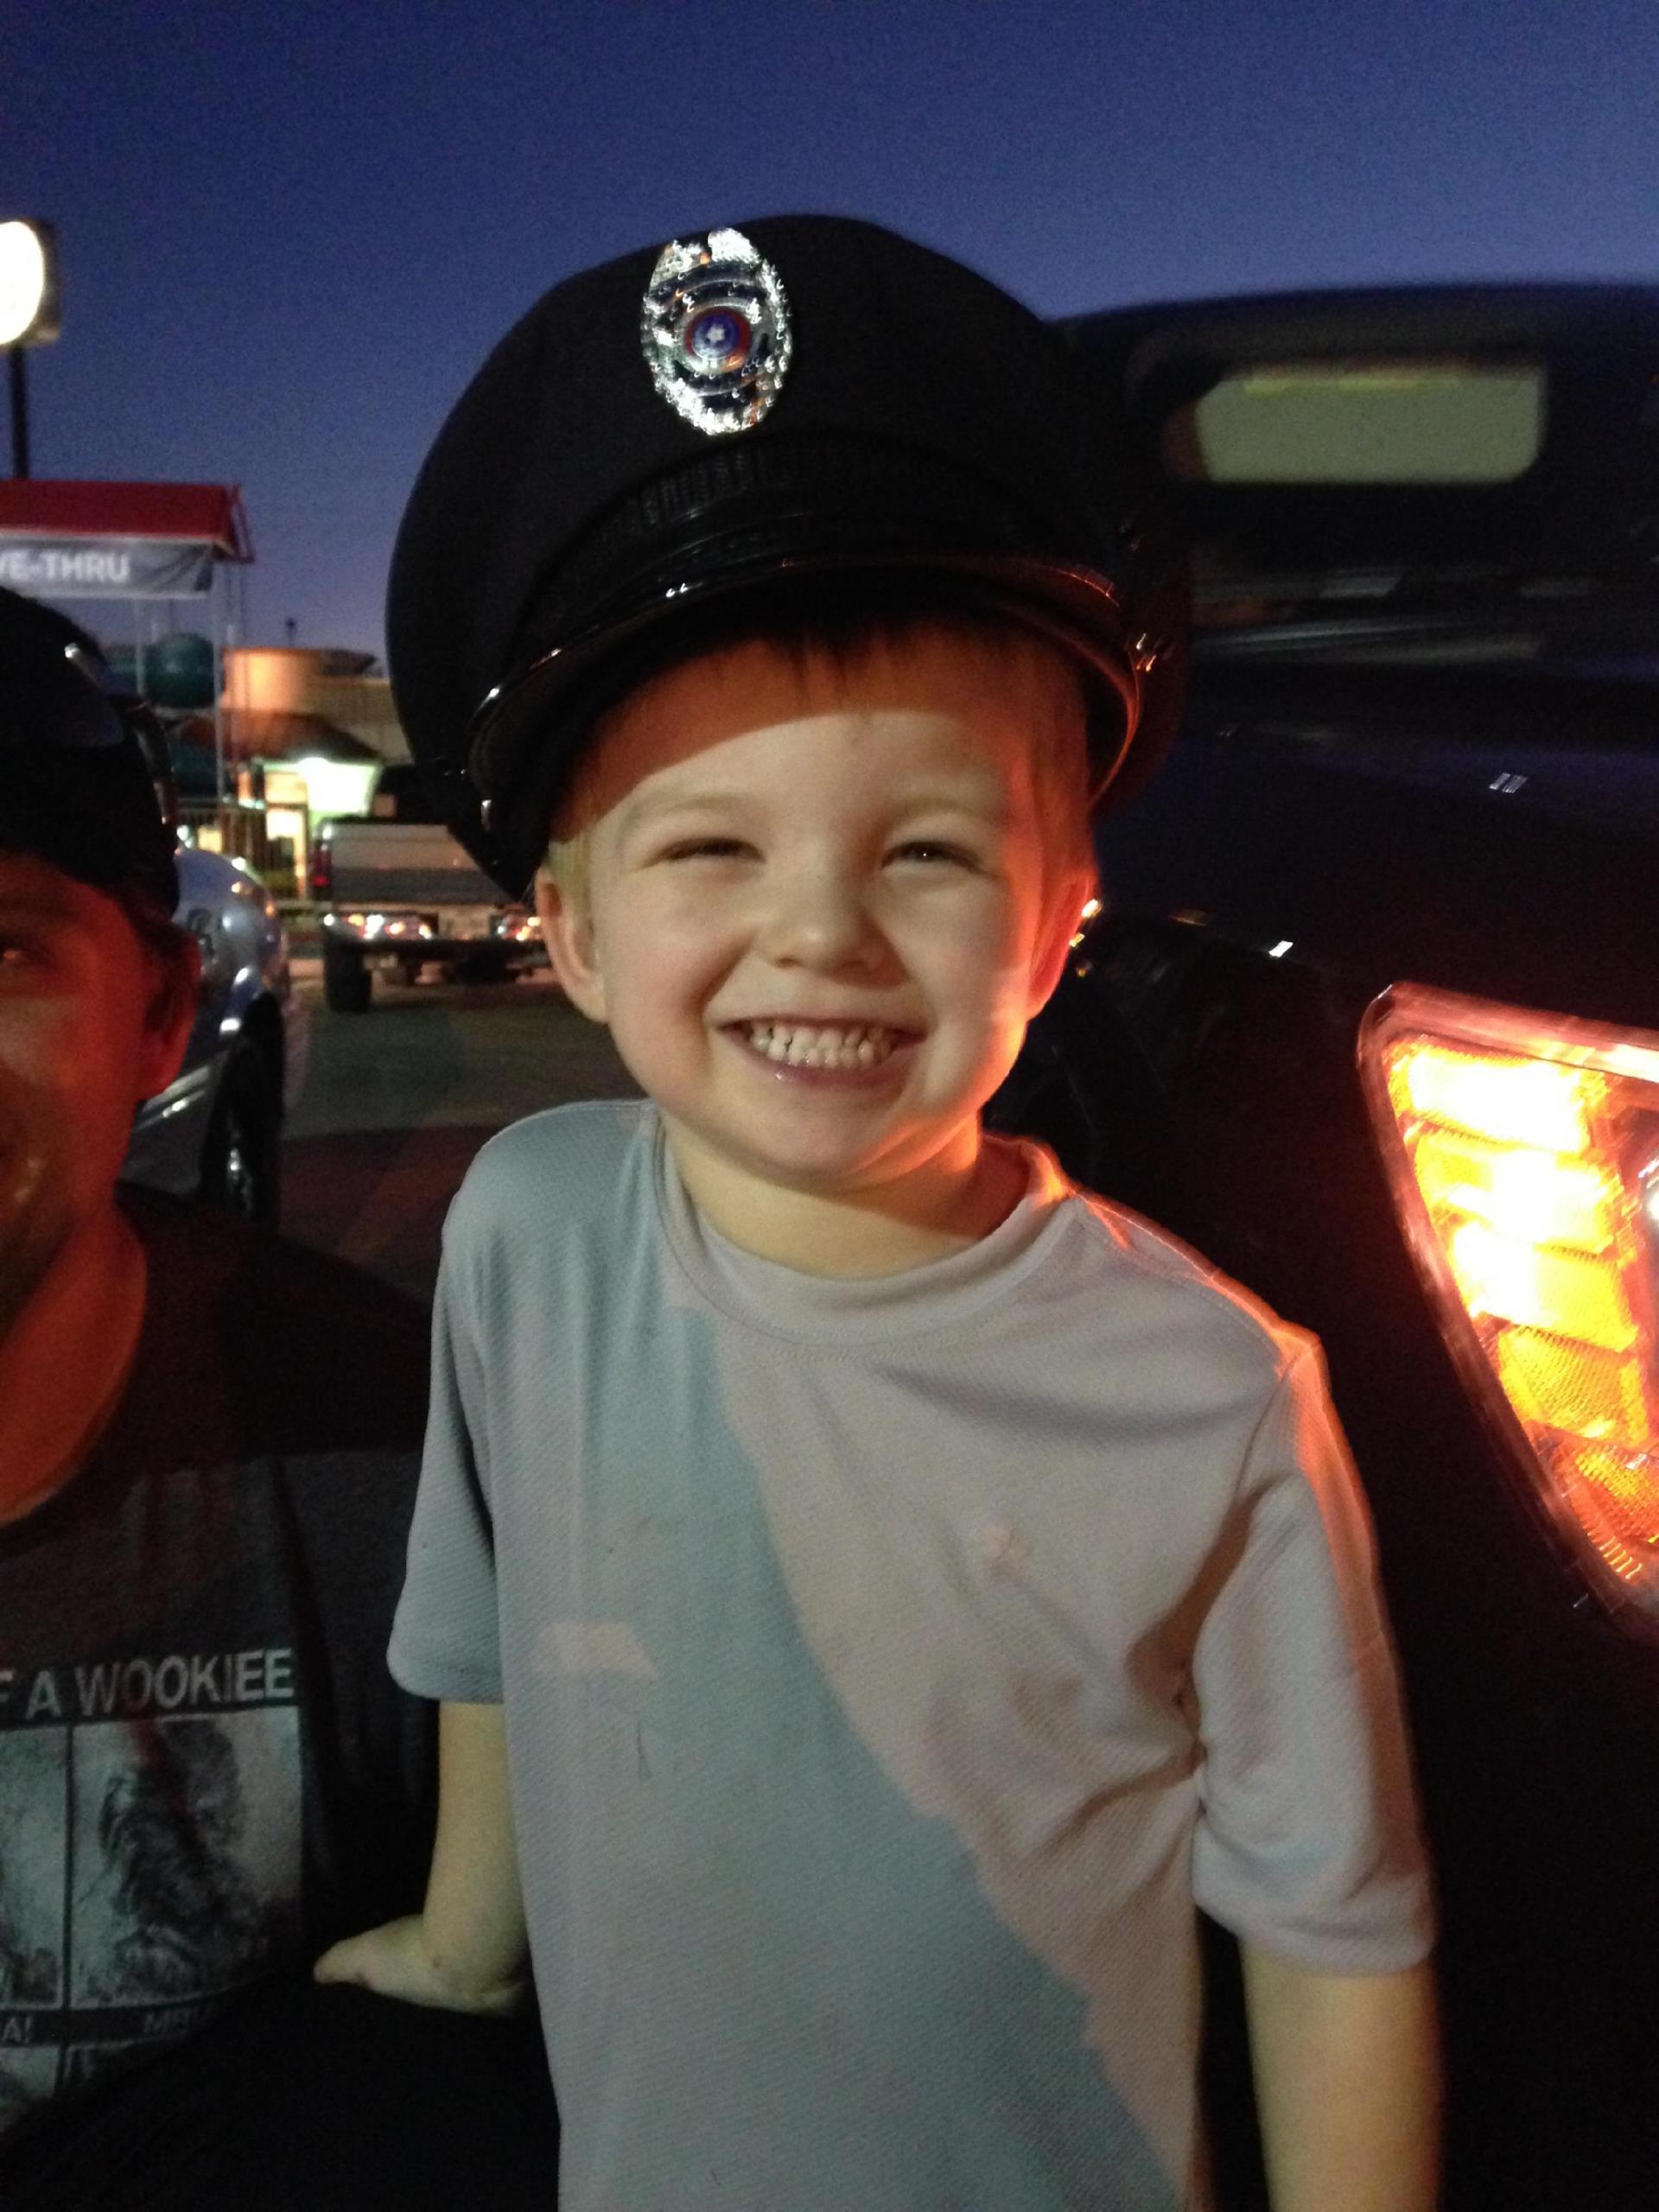 Kid in police officer's hat